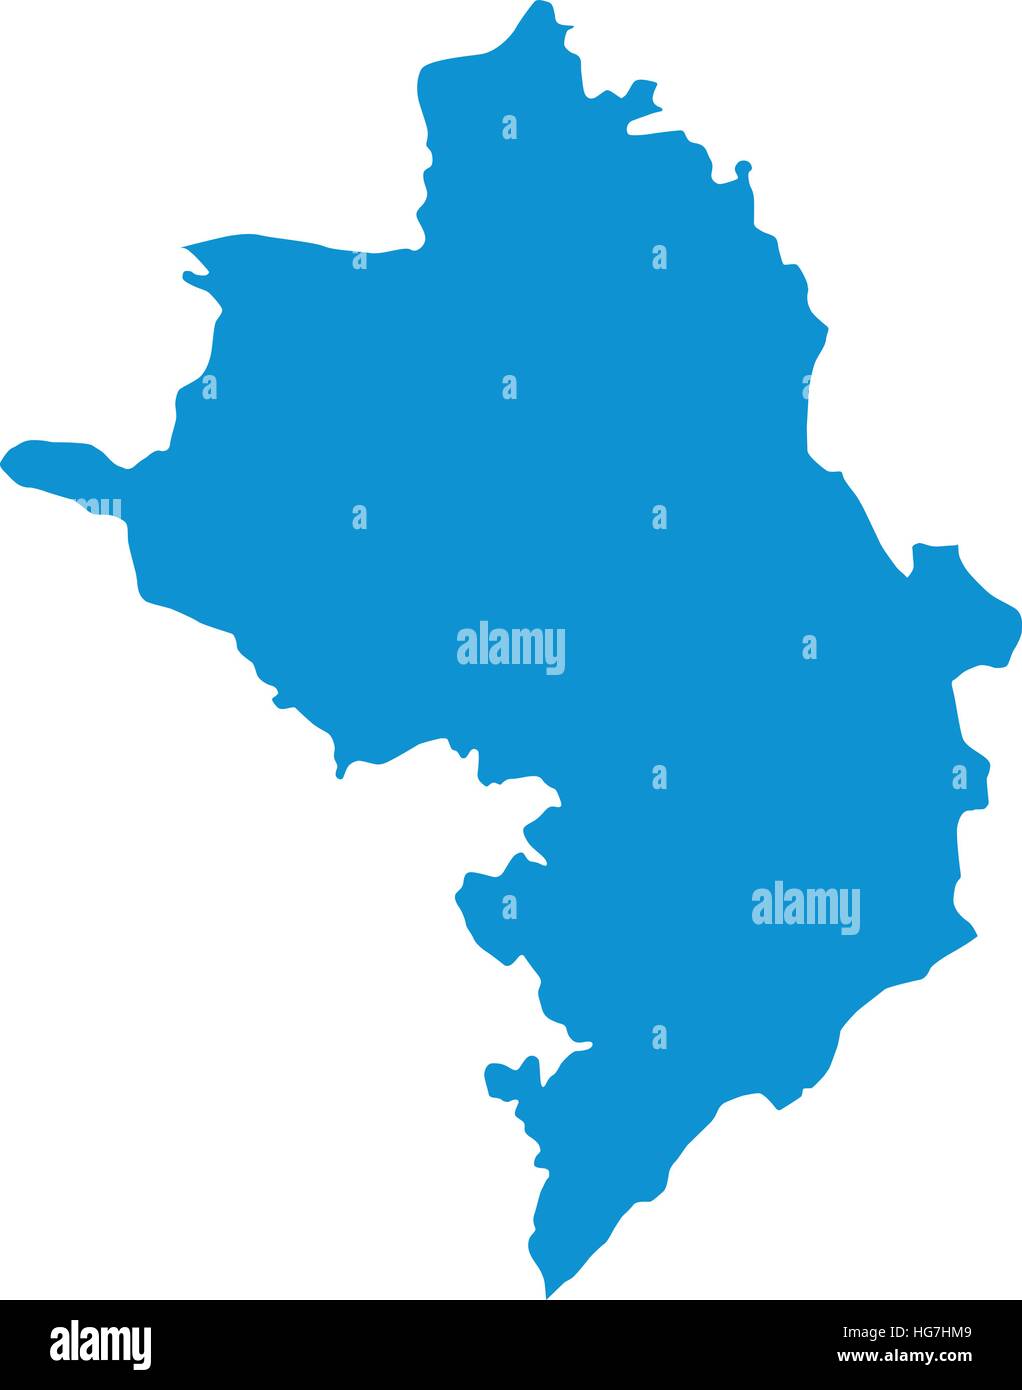 Azerbaijan map Stock Vector Images - Alamy